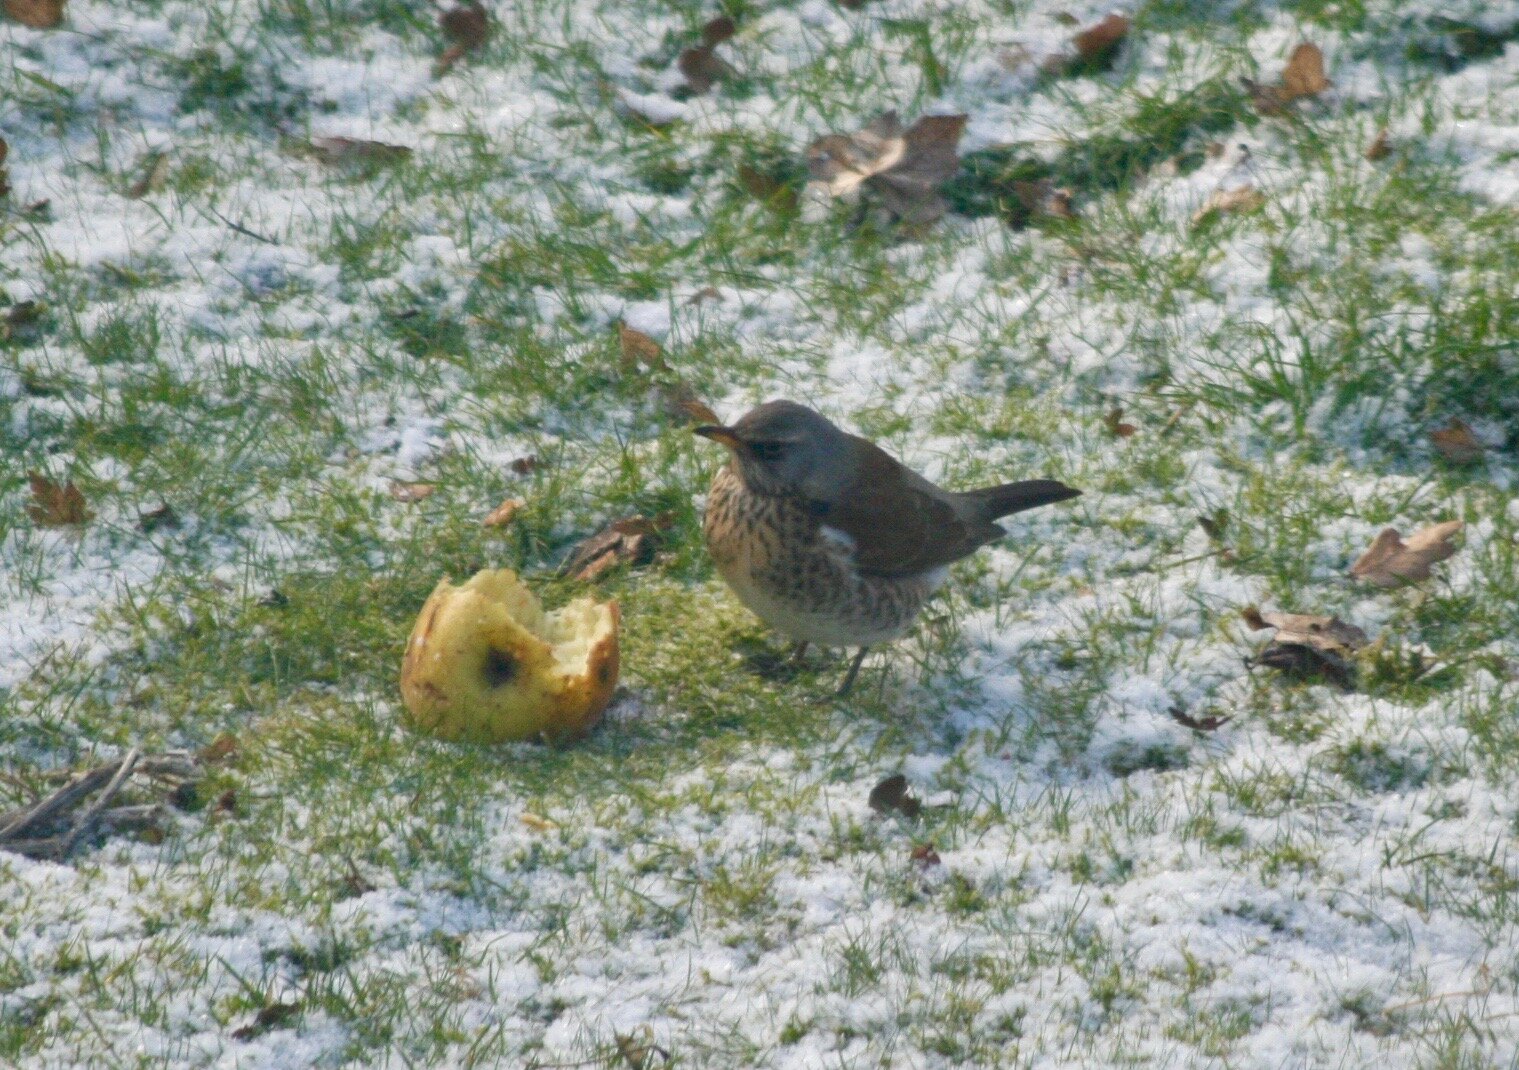 A fieldfare enjoying a windfall apple